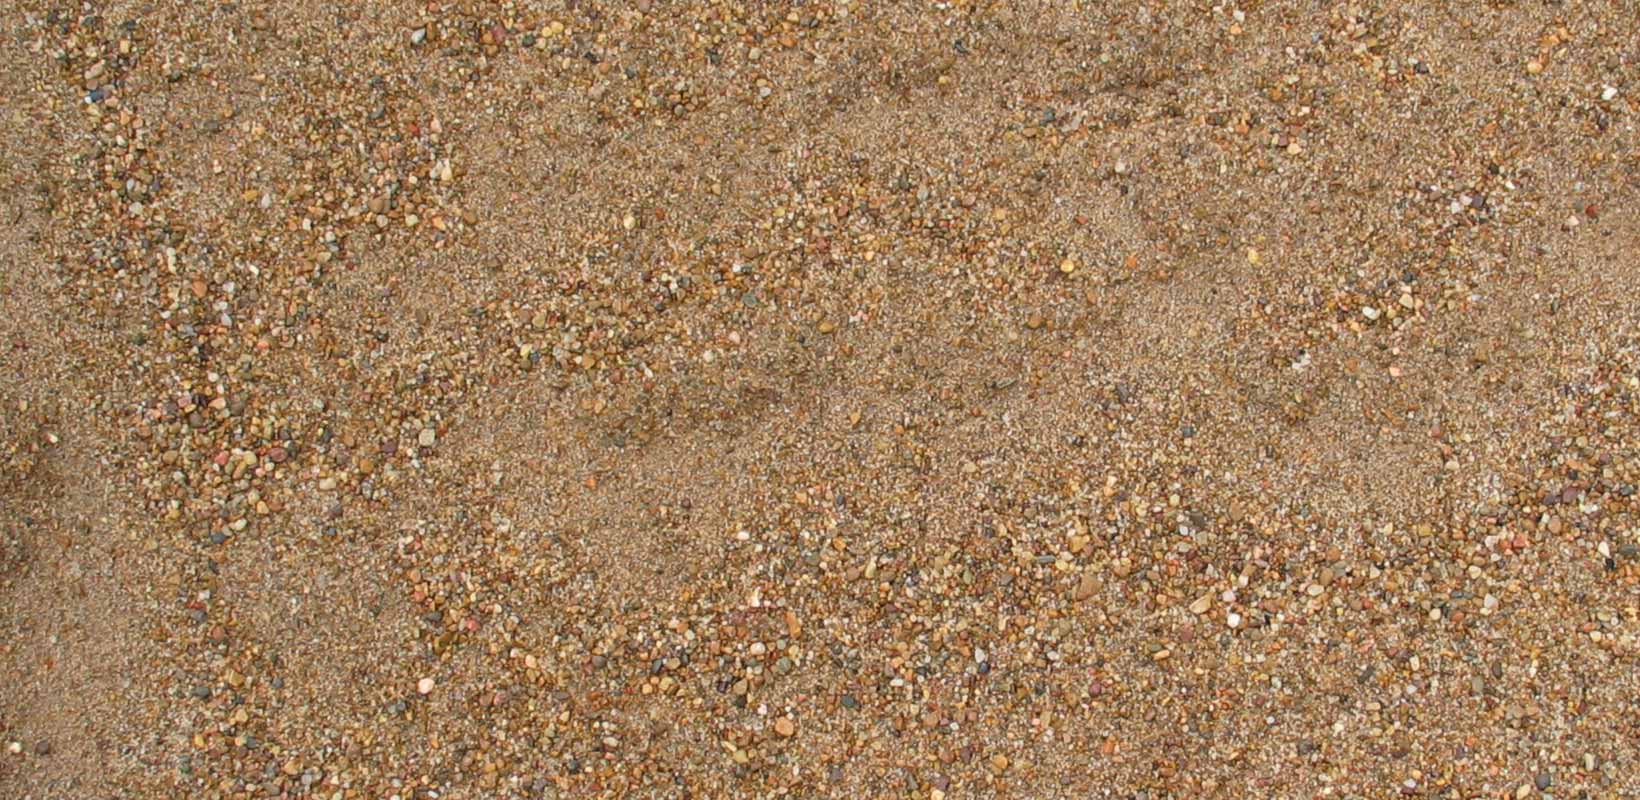 How To Choose The Right Sand Ozinga